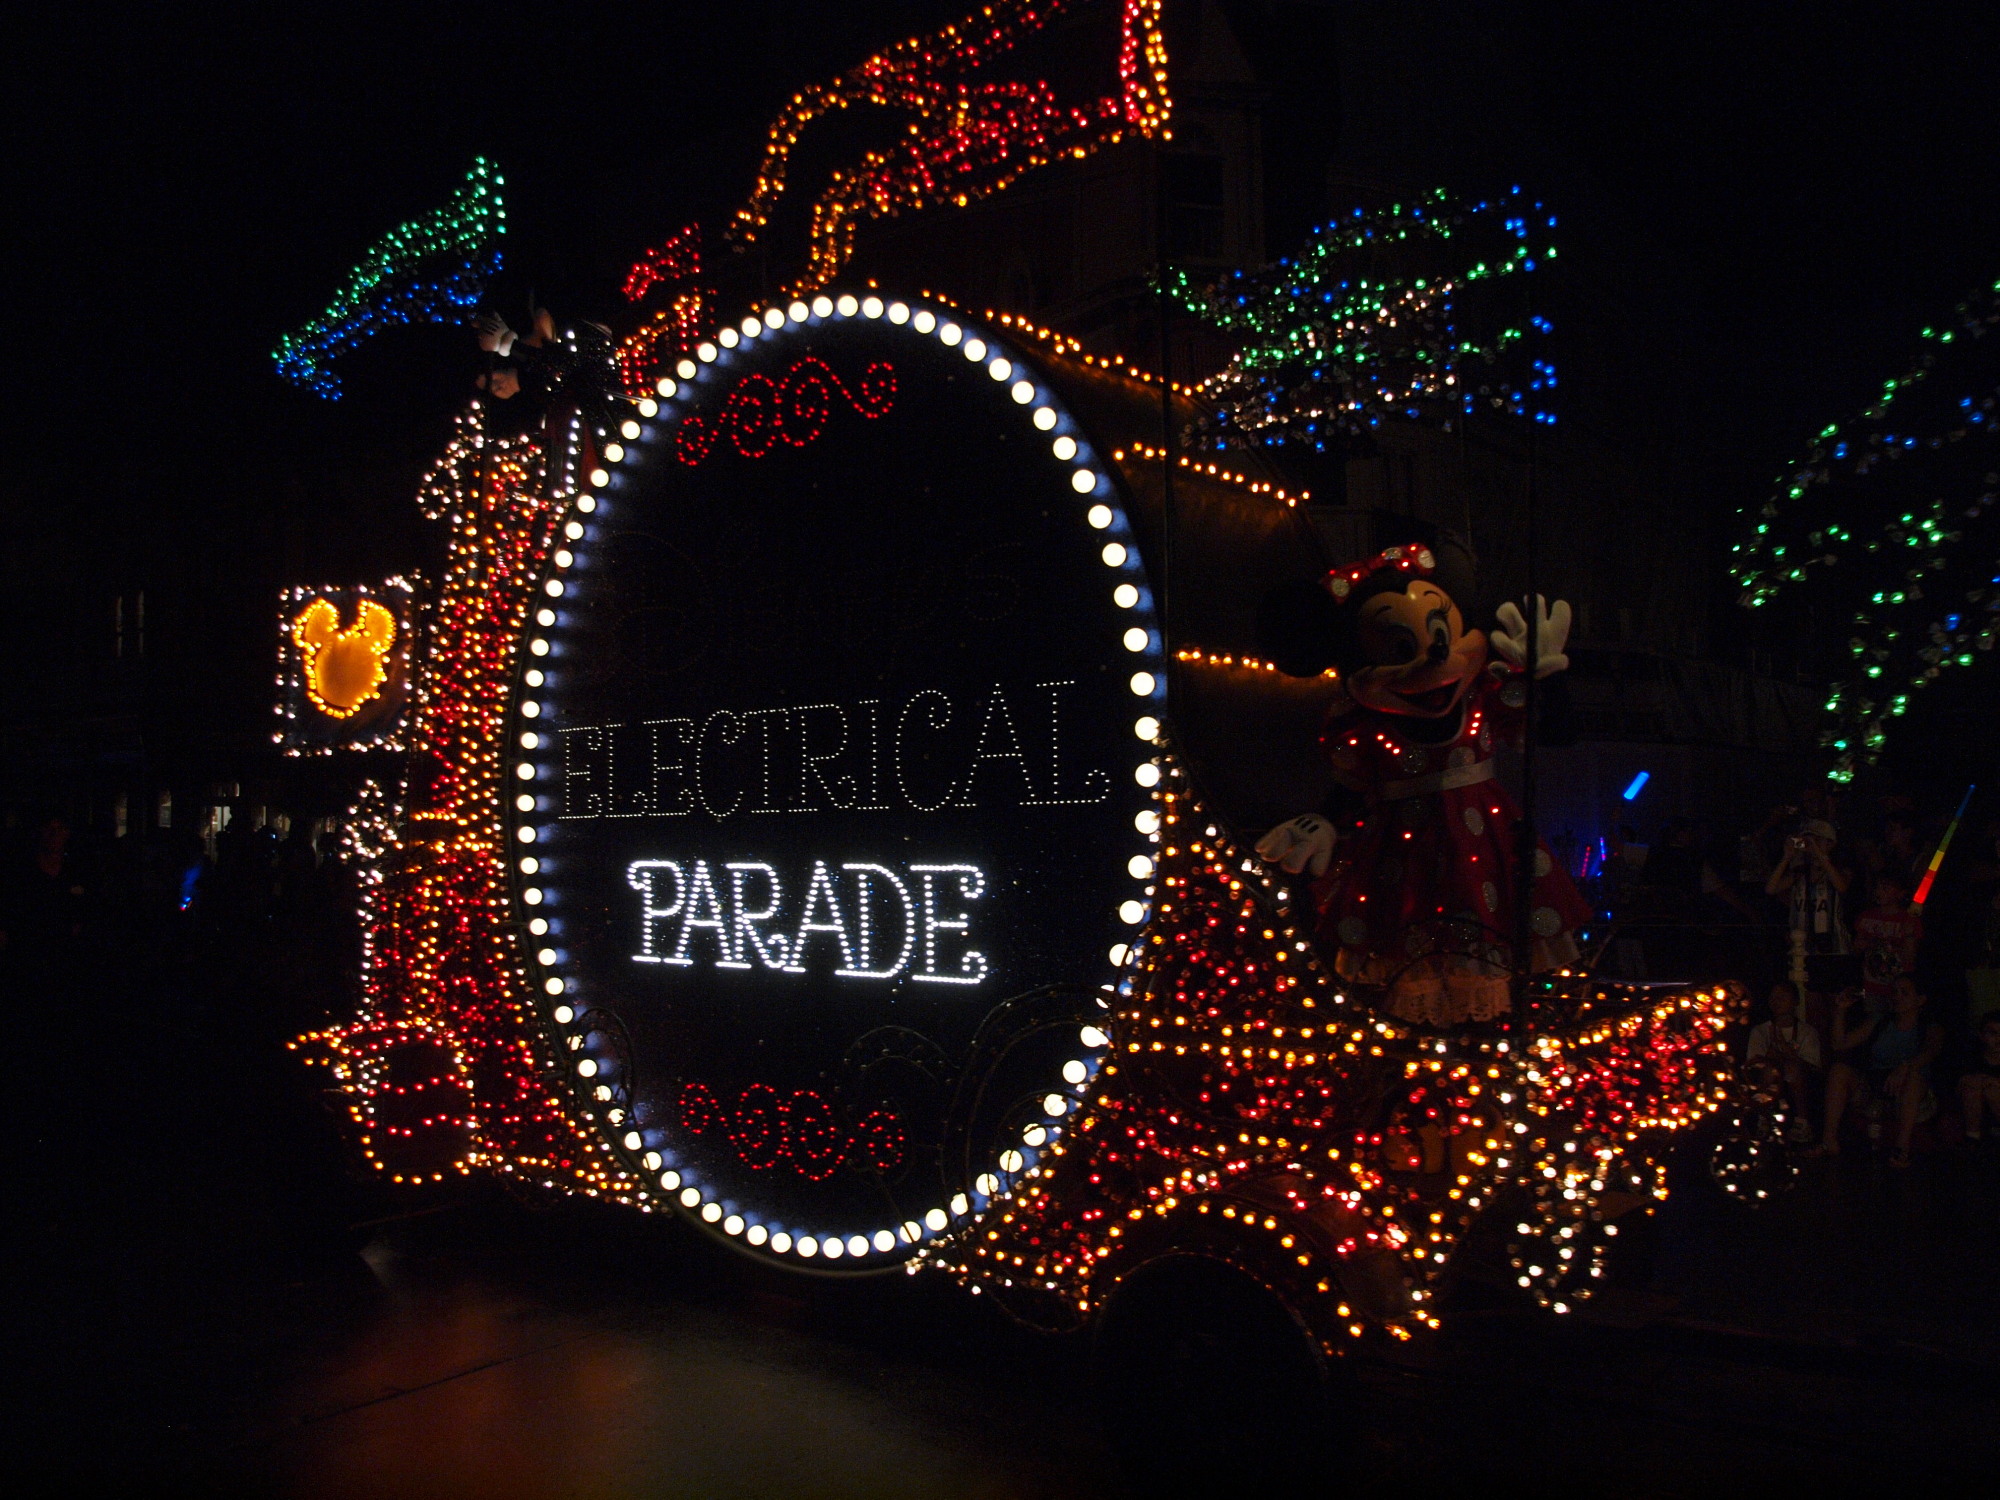 Magic Kingdom - Main Street Electrical Parade